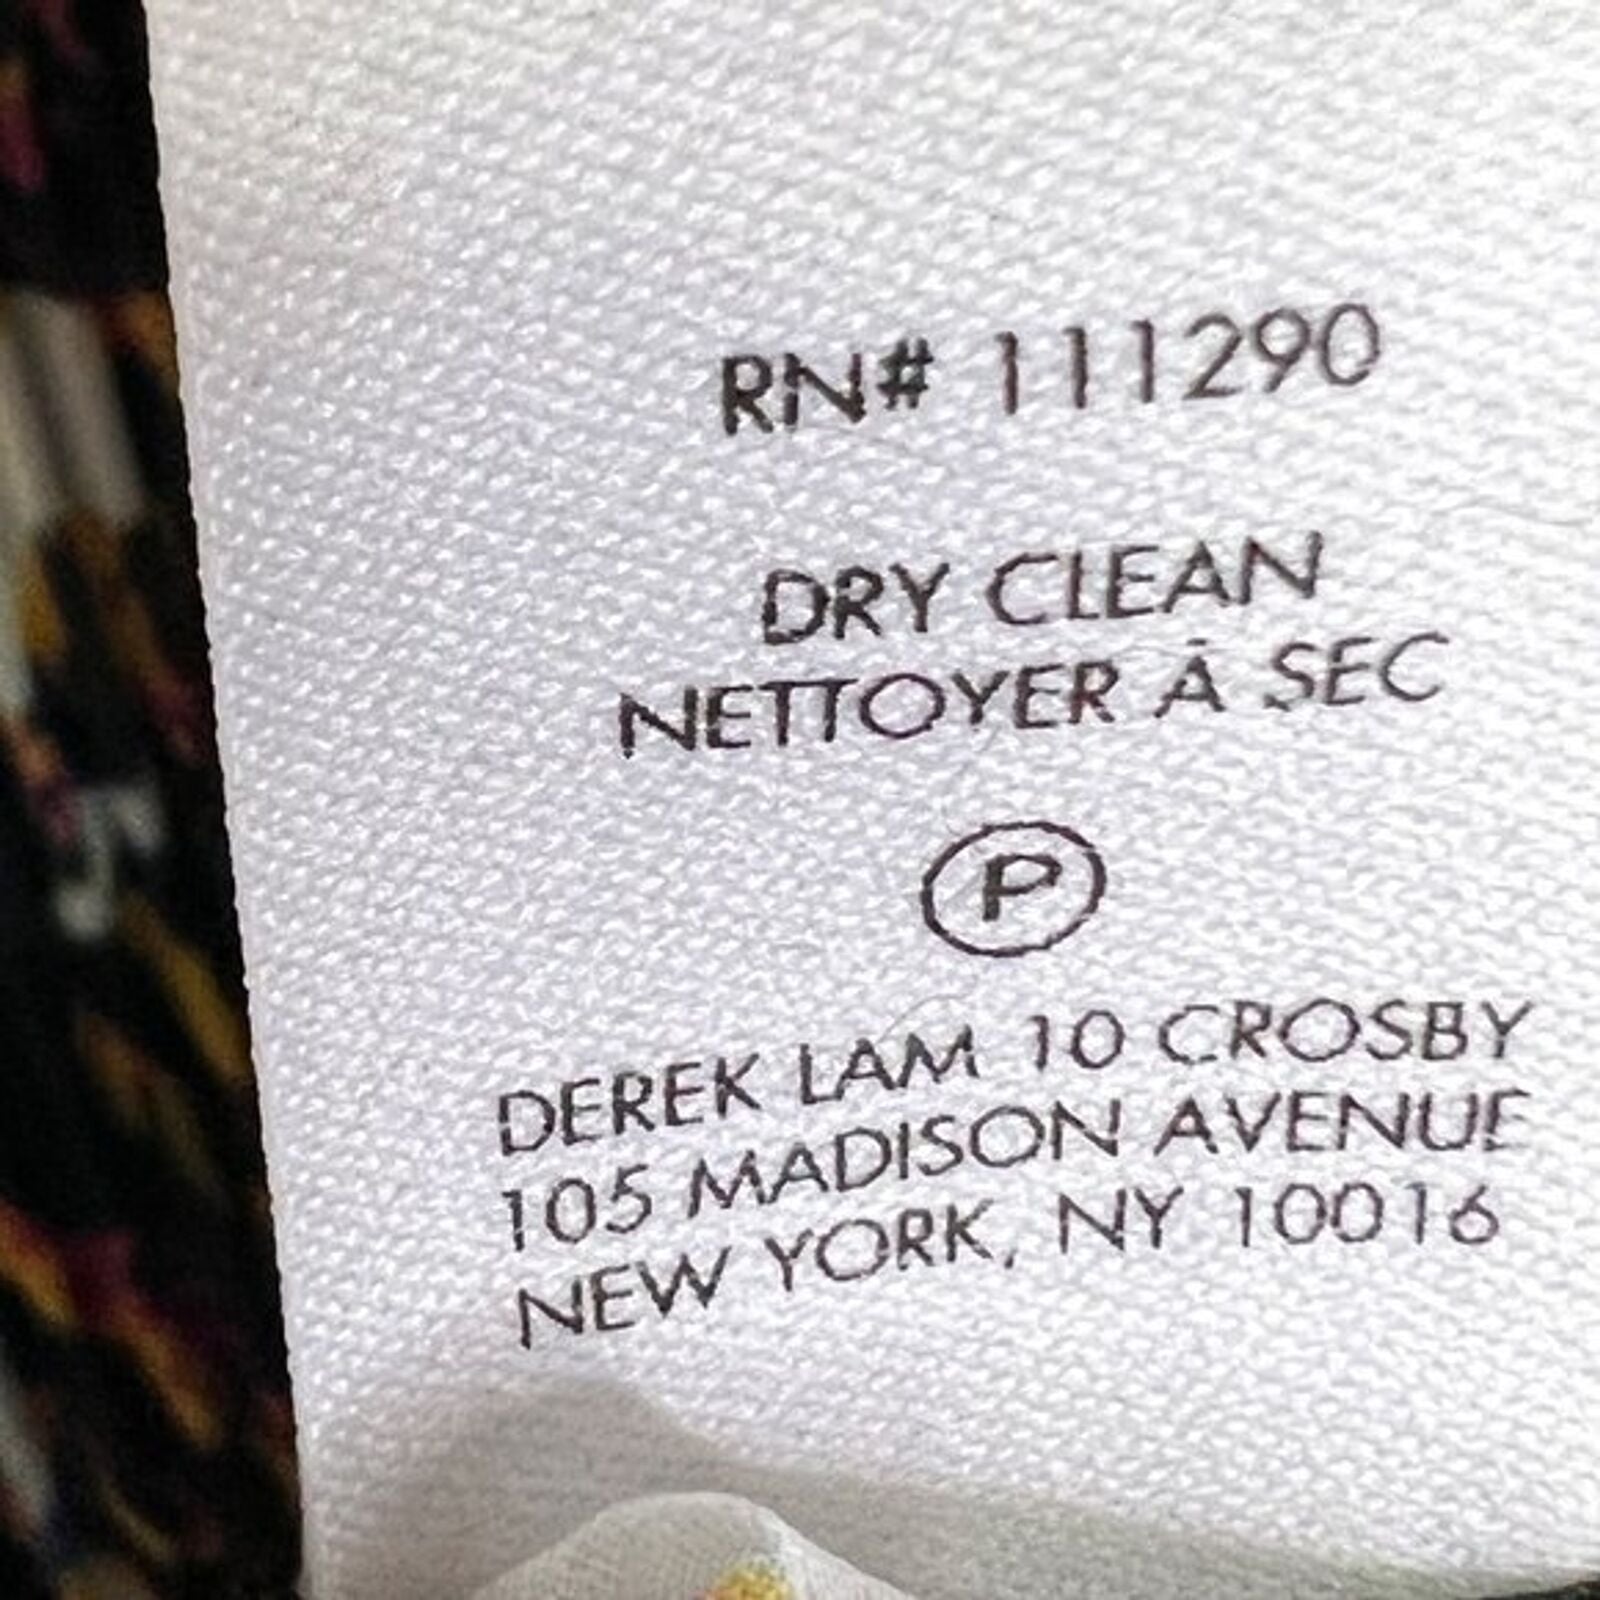 Derek Lam 10 Crosby Helena Pleated Tassel Tie Blouse Size 0